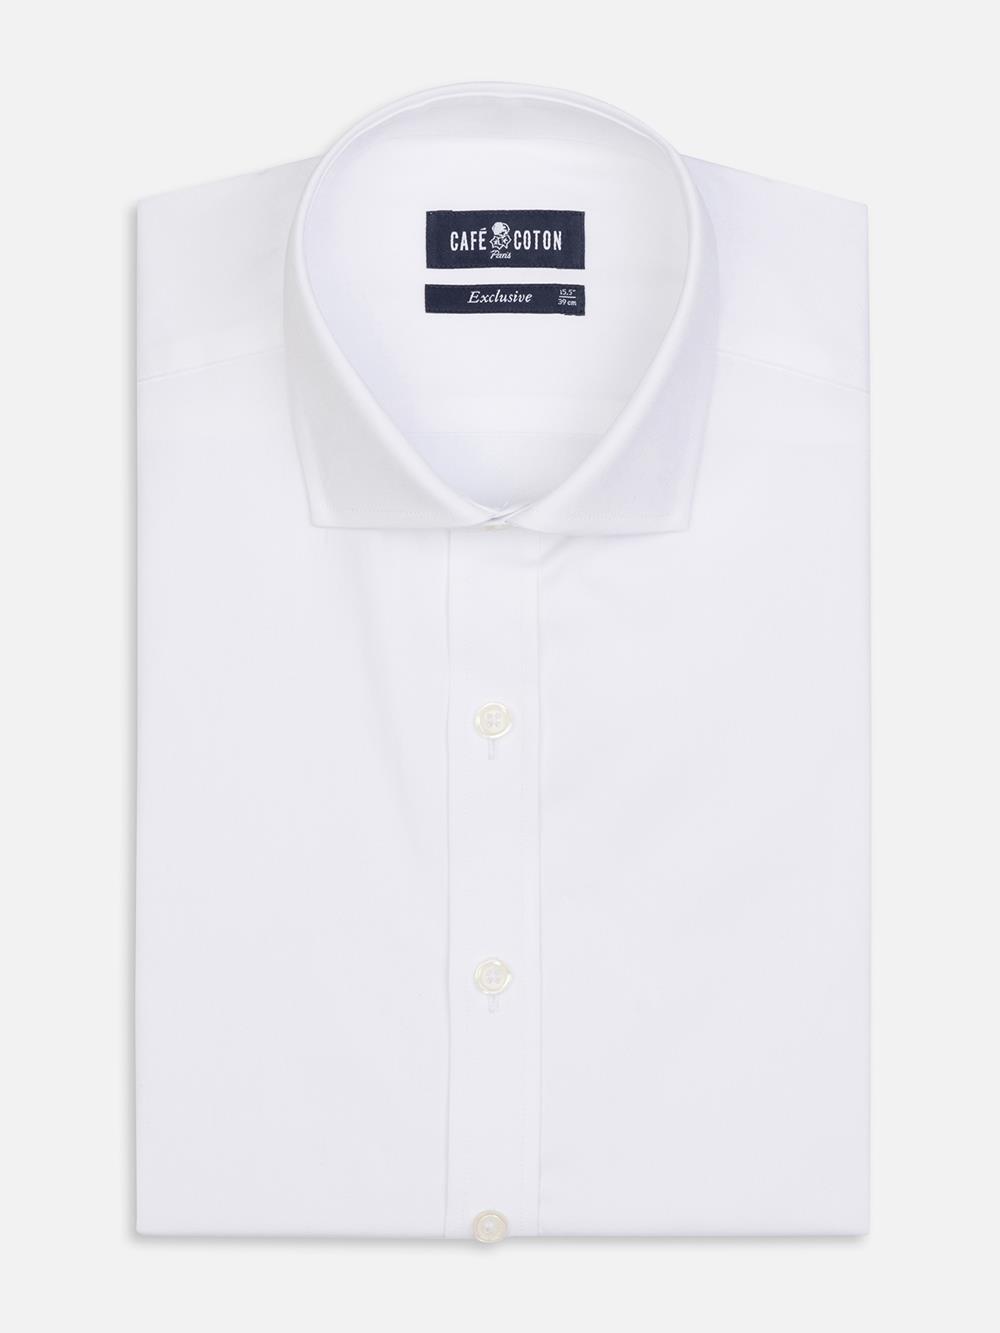 White Pin Point slim fit shirt